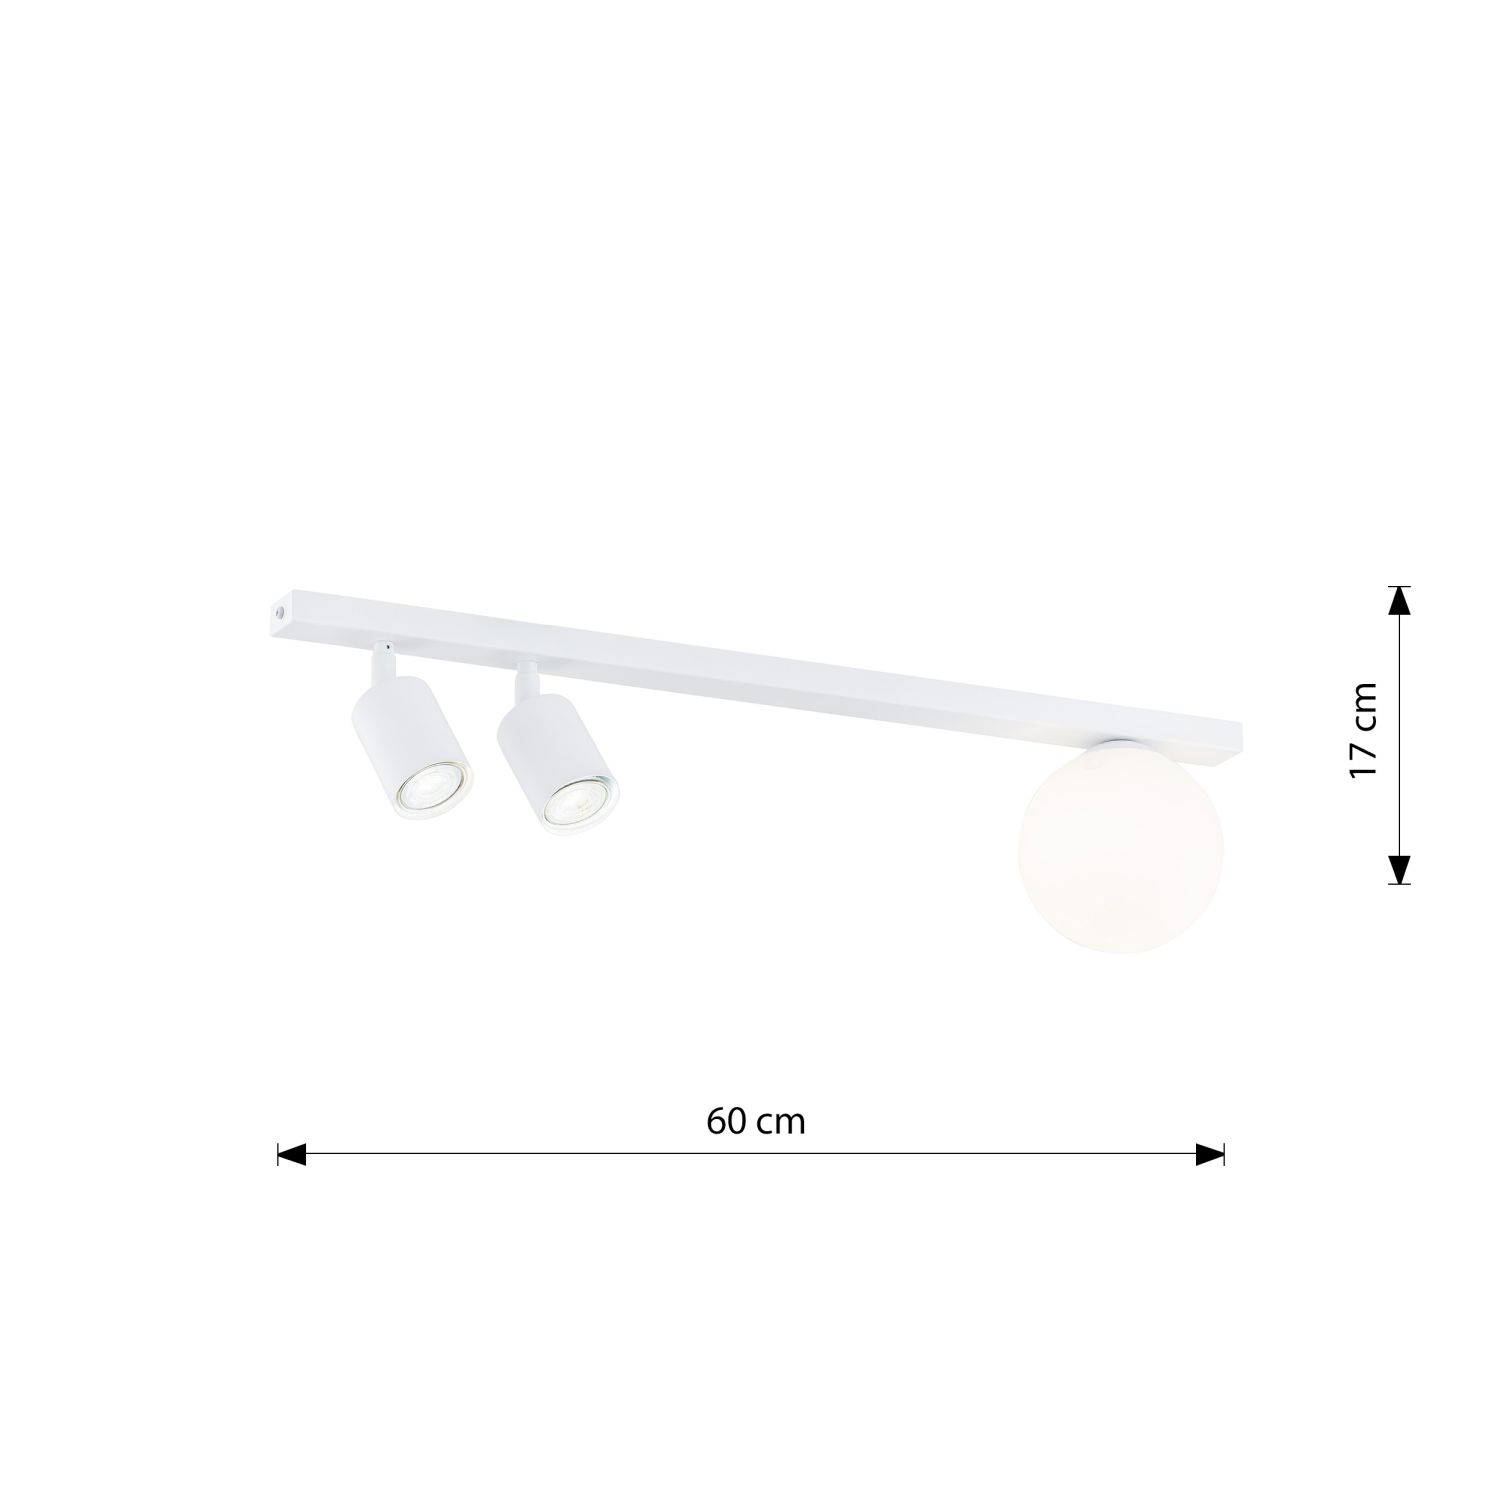 Deckenstrahler 60 cm lang Weiß GU10 + E14 Metall Glas